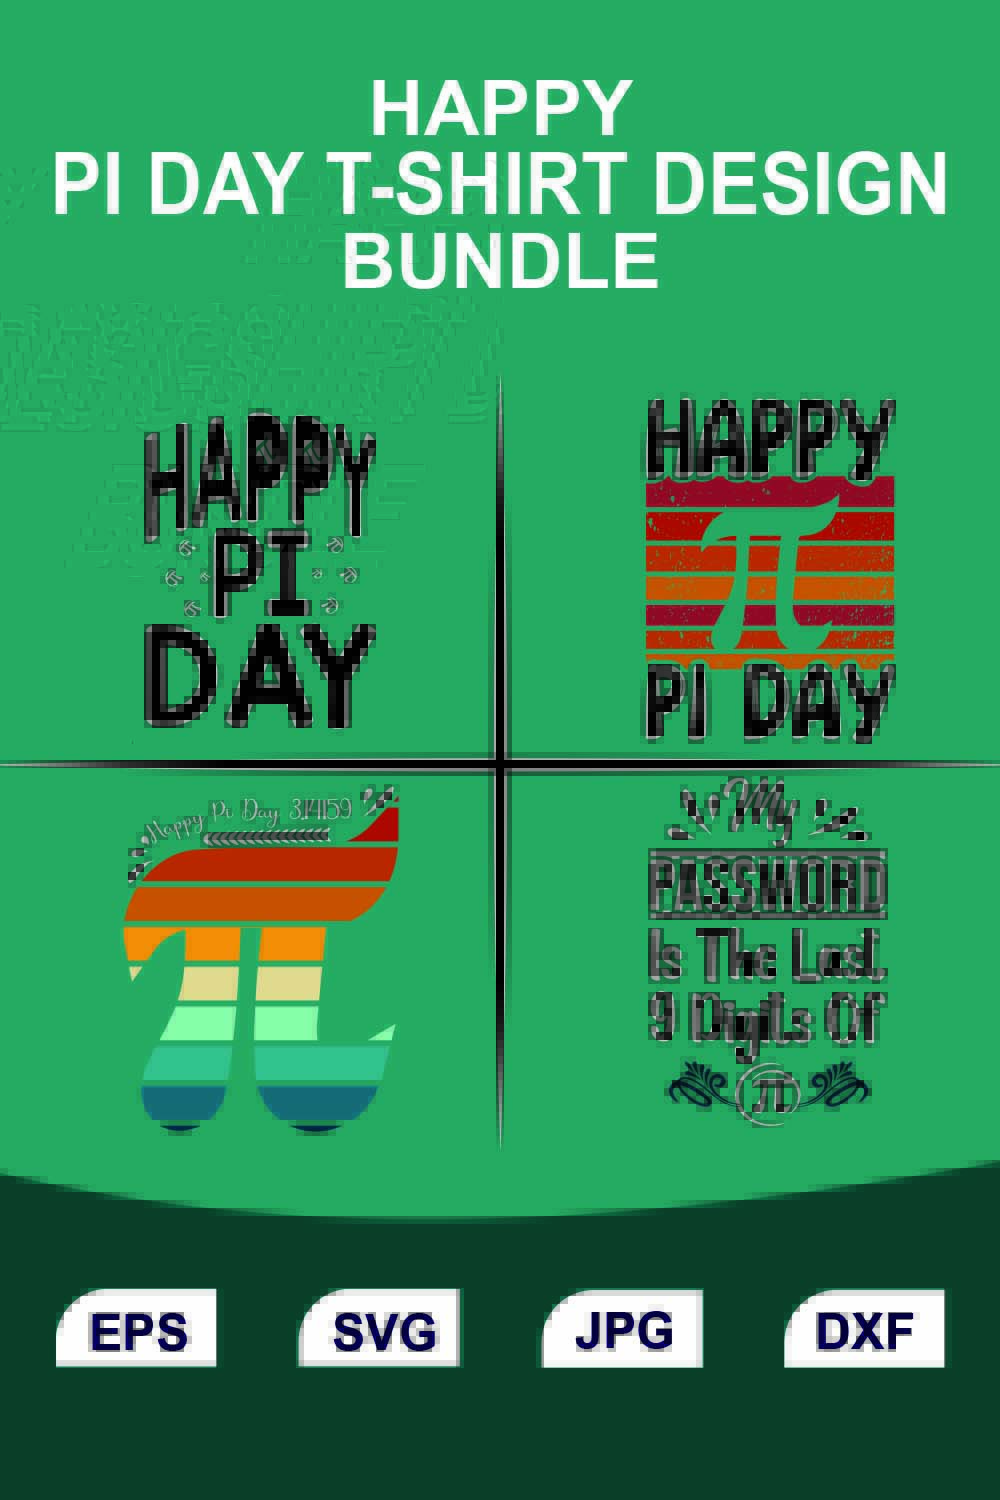 Happy Pi Day T-shirt Design Bundle pinterest preview image.